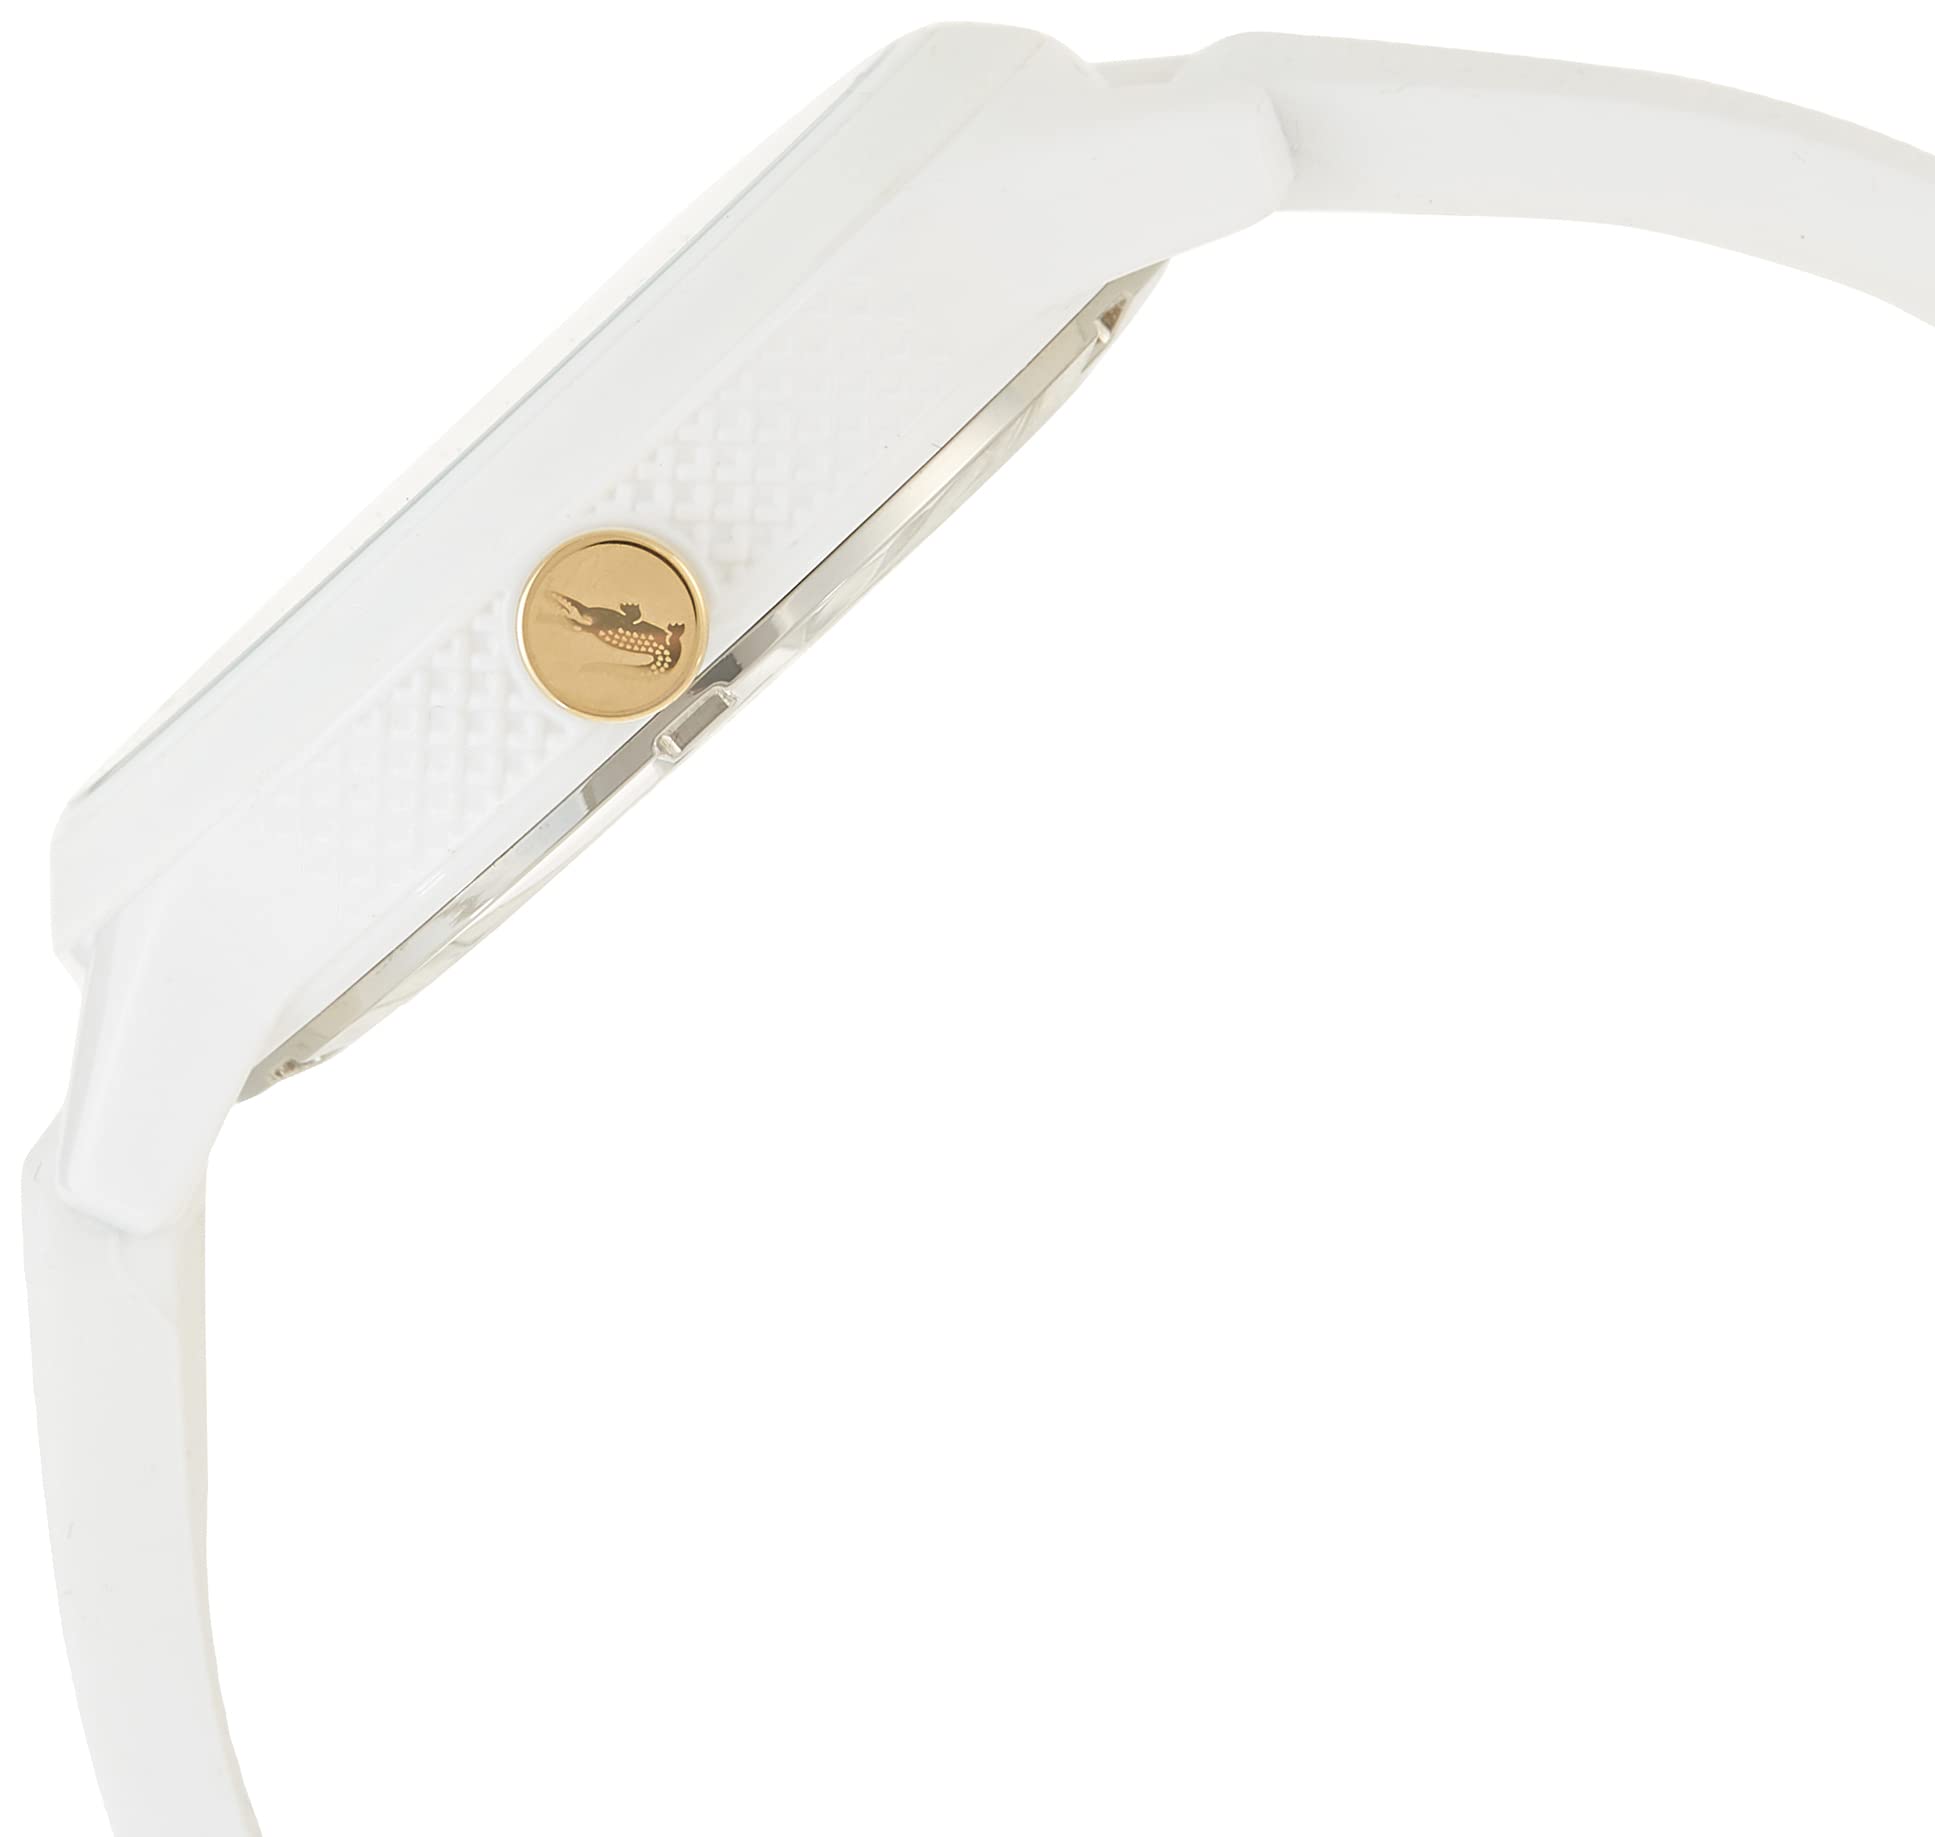 Lacoste Analogue Quartz Watch for Women with White Silicone Bracelet - 2001063, White, Unique Size, Strap